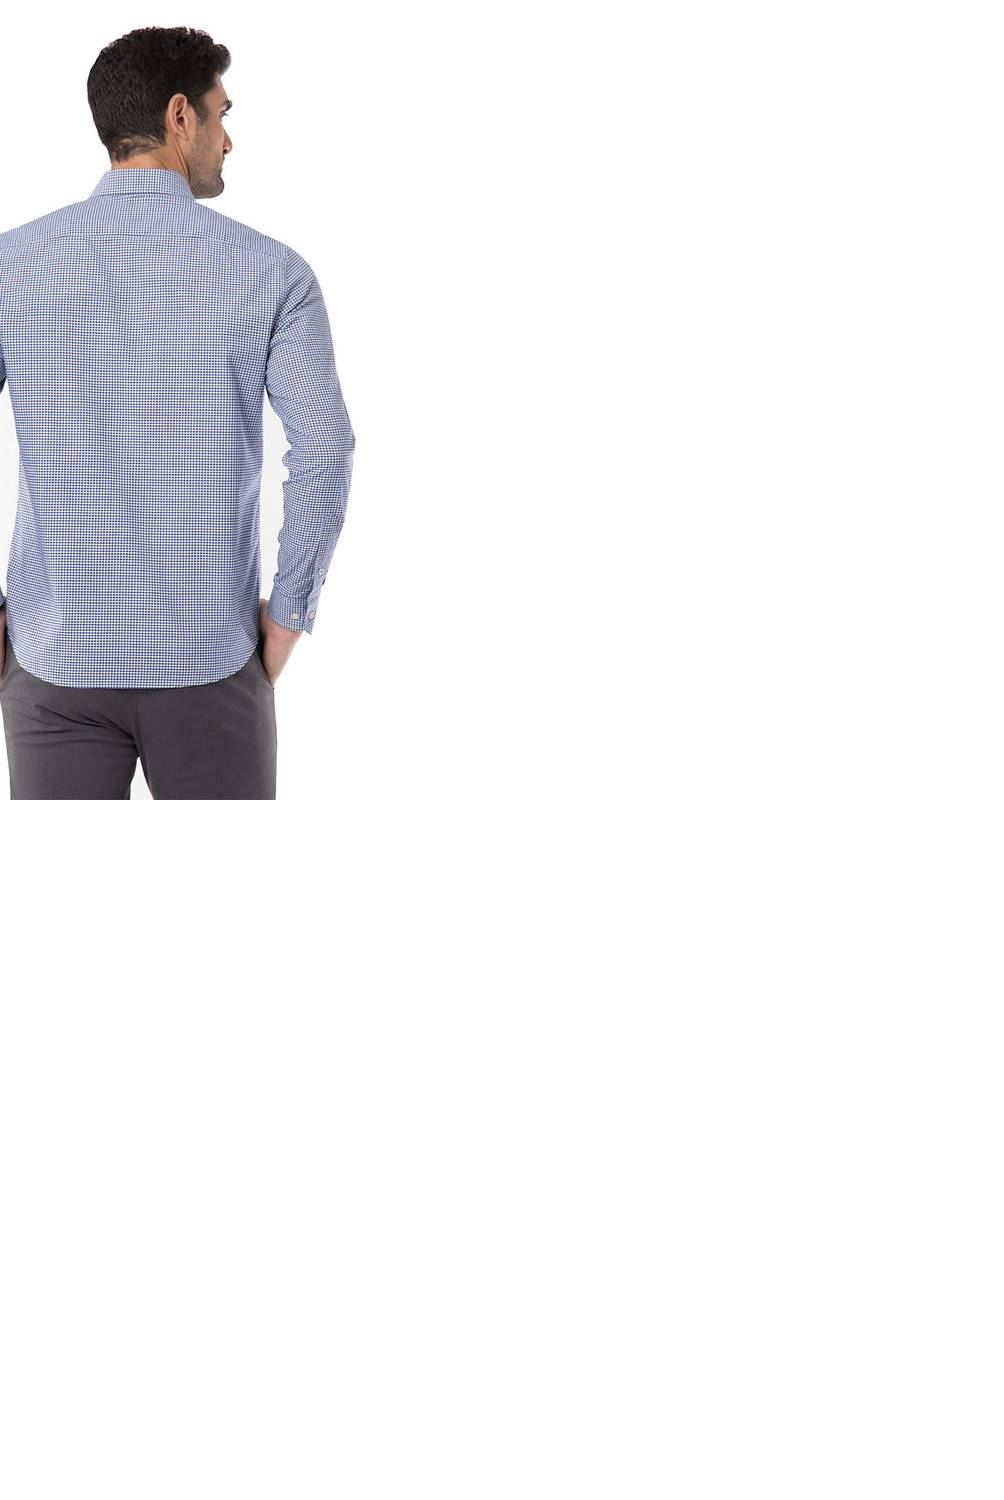 ARROW - Camisa Manga Larga Hombre